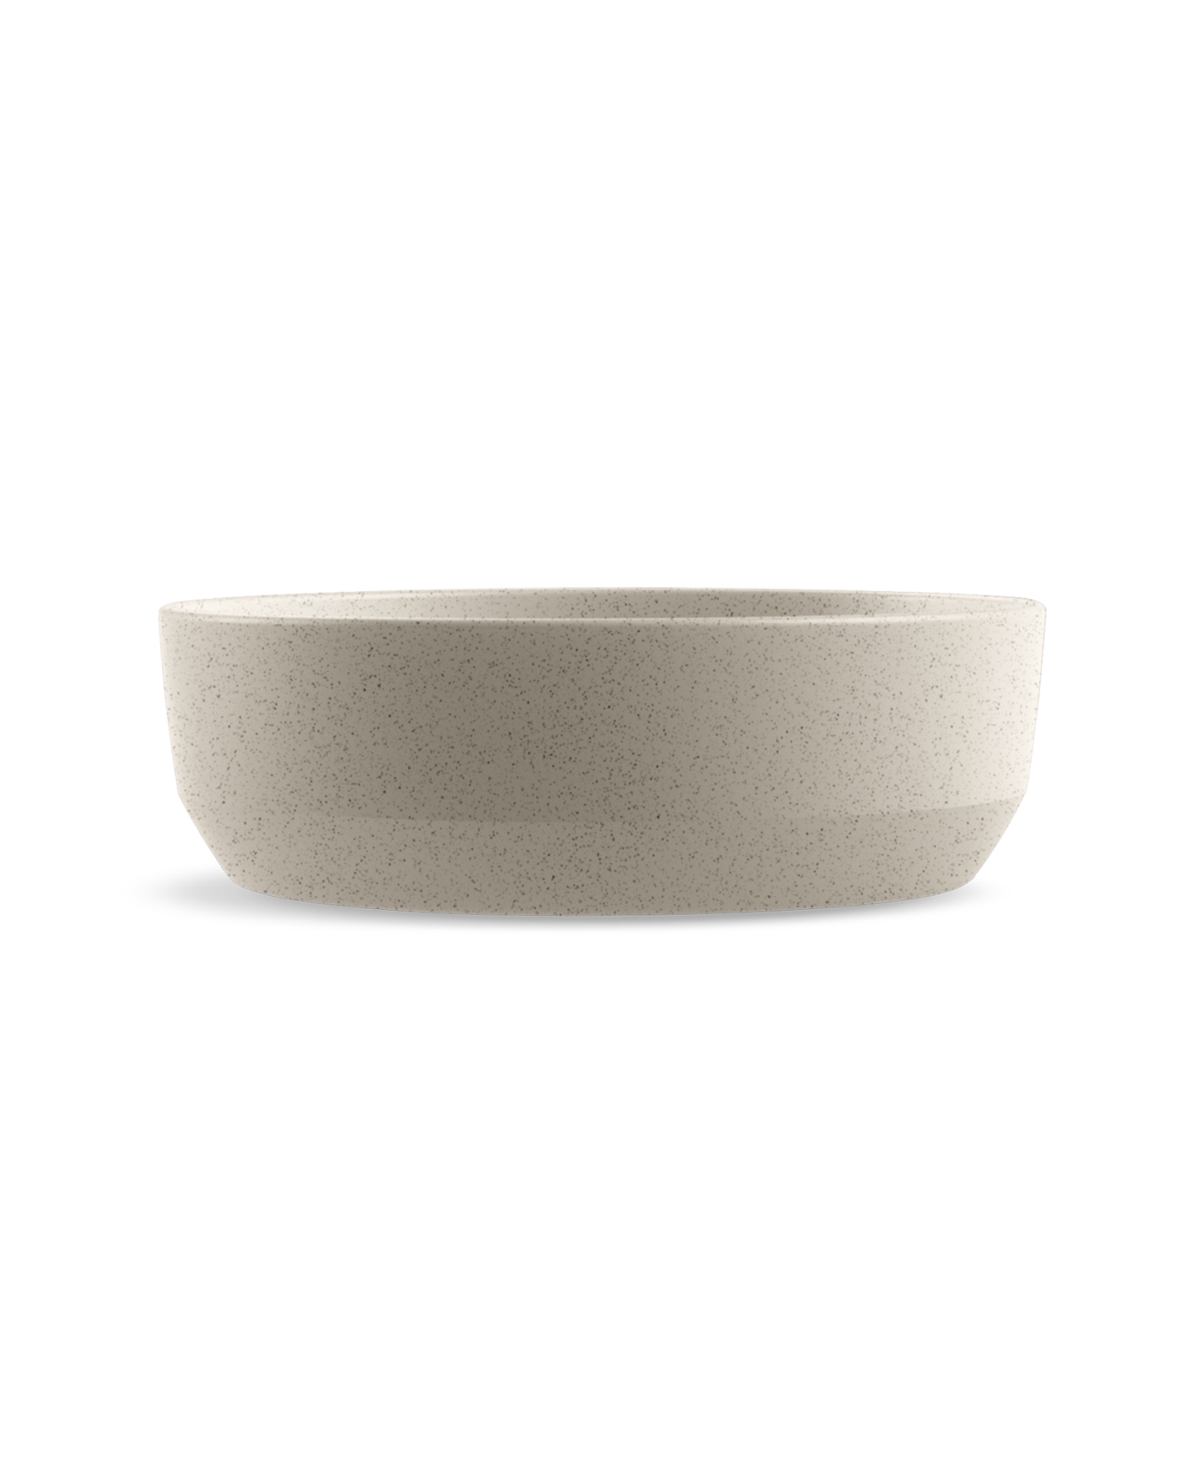 Bevel Wheat Polypropylene Medium Bowl, Set of 2 - Cream